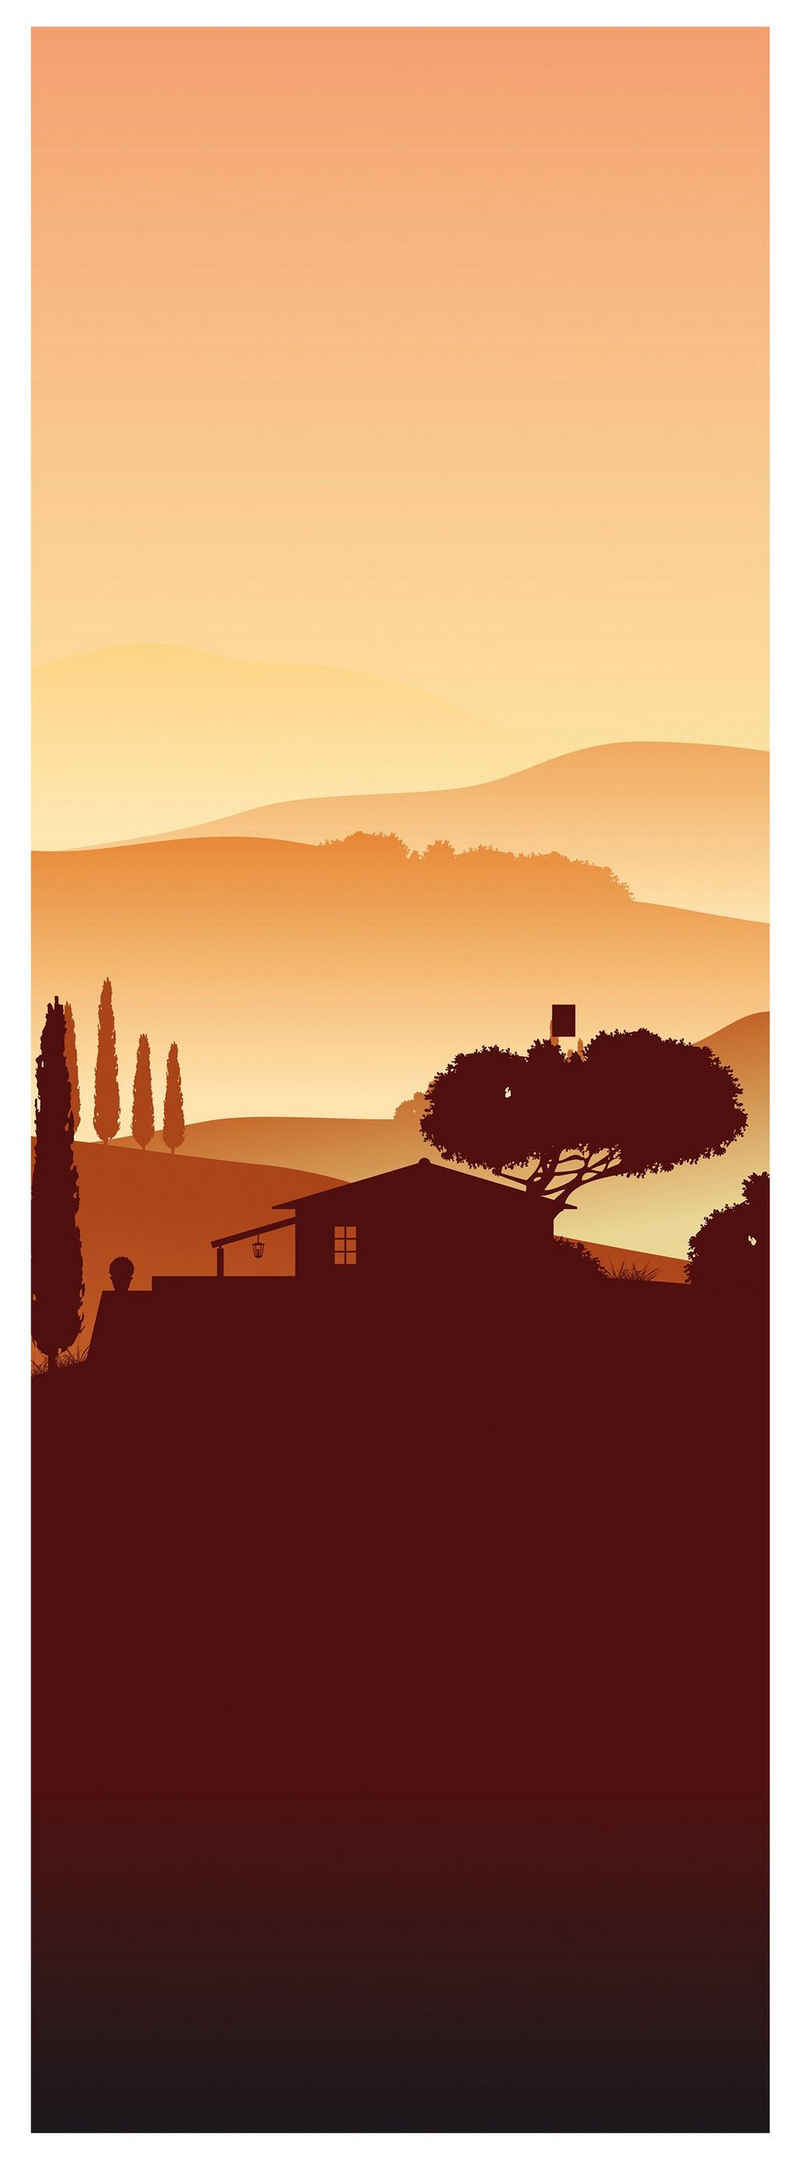 wandmotiv24 Türtapete Italienische Landschaft Natur, glatt, Fototapete, Wandtapete, Motivtapete, matt, selbstklebende Dekorfolie